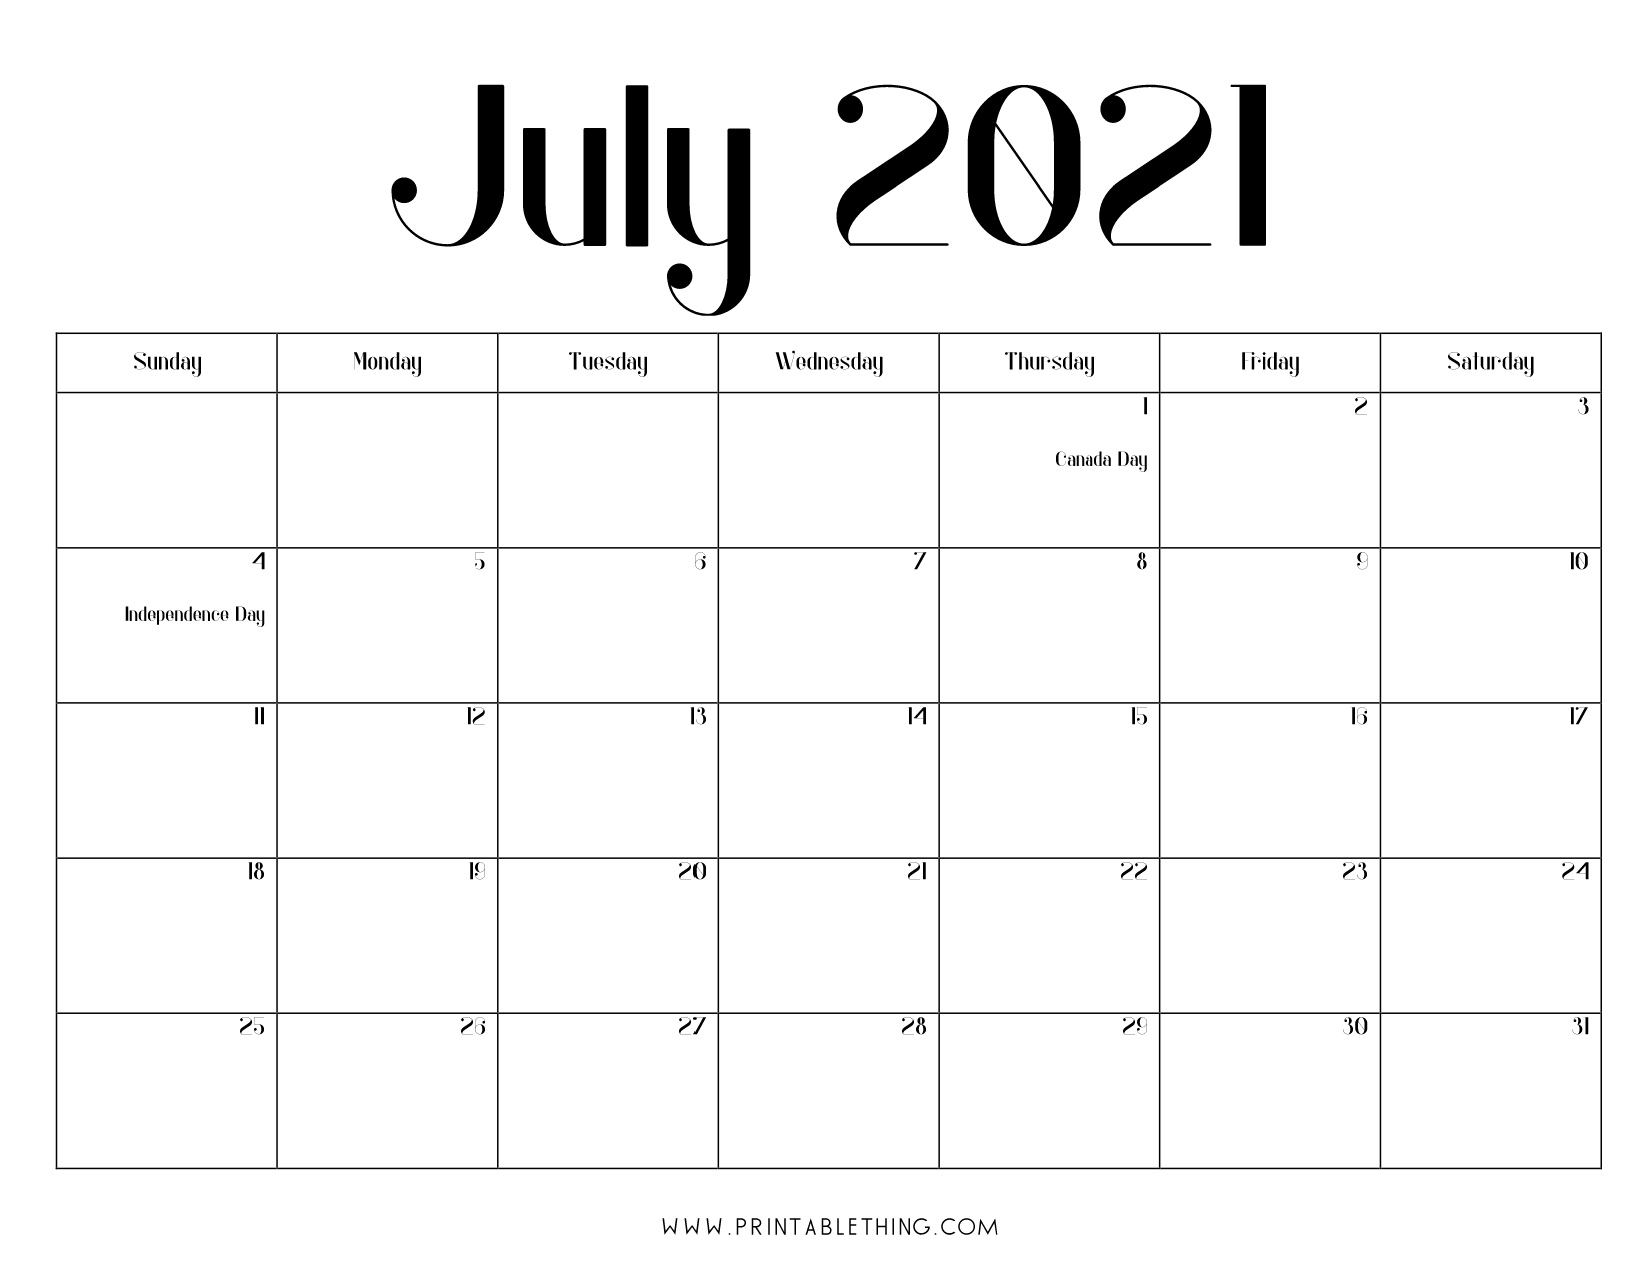 July 2021 Calendar Pdf, July 2021 Calendar Image, Print Pdf &amp; Image Printable July And August 2021 Calendar